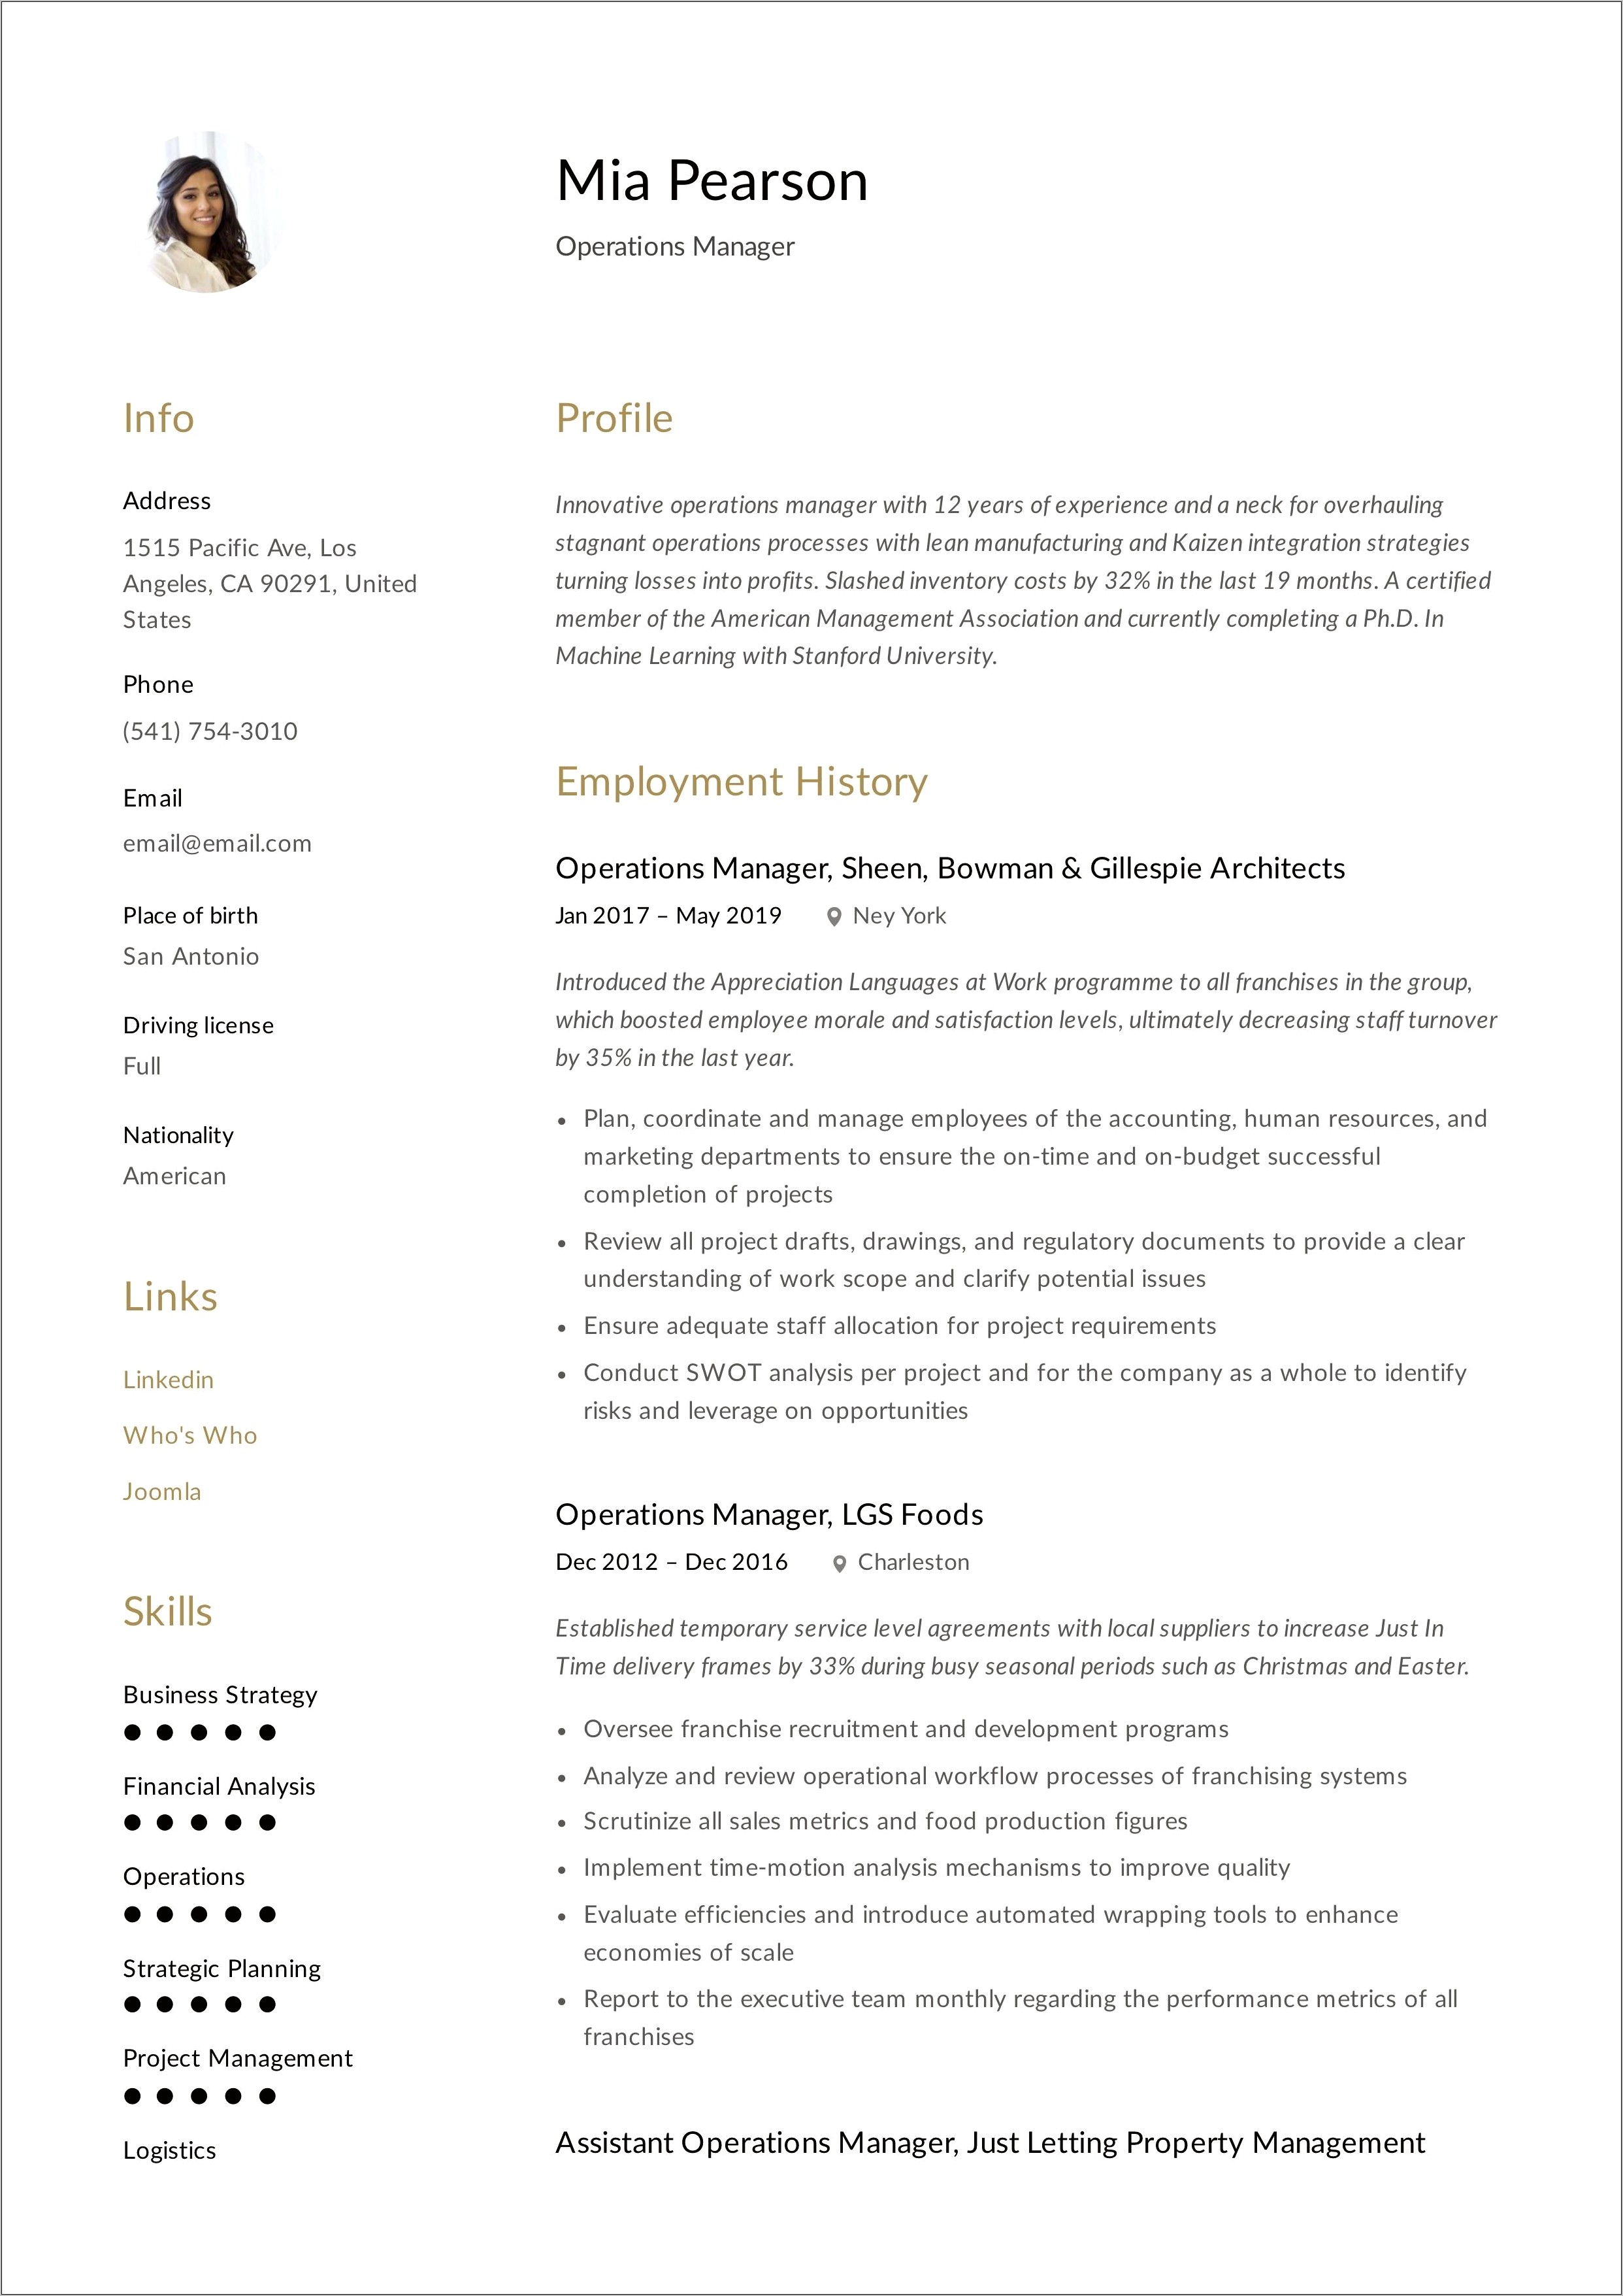 Example Job Description For Resume